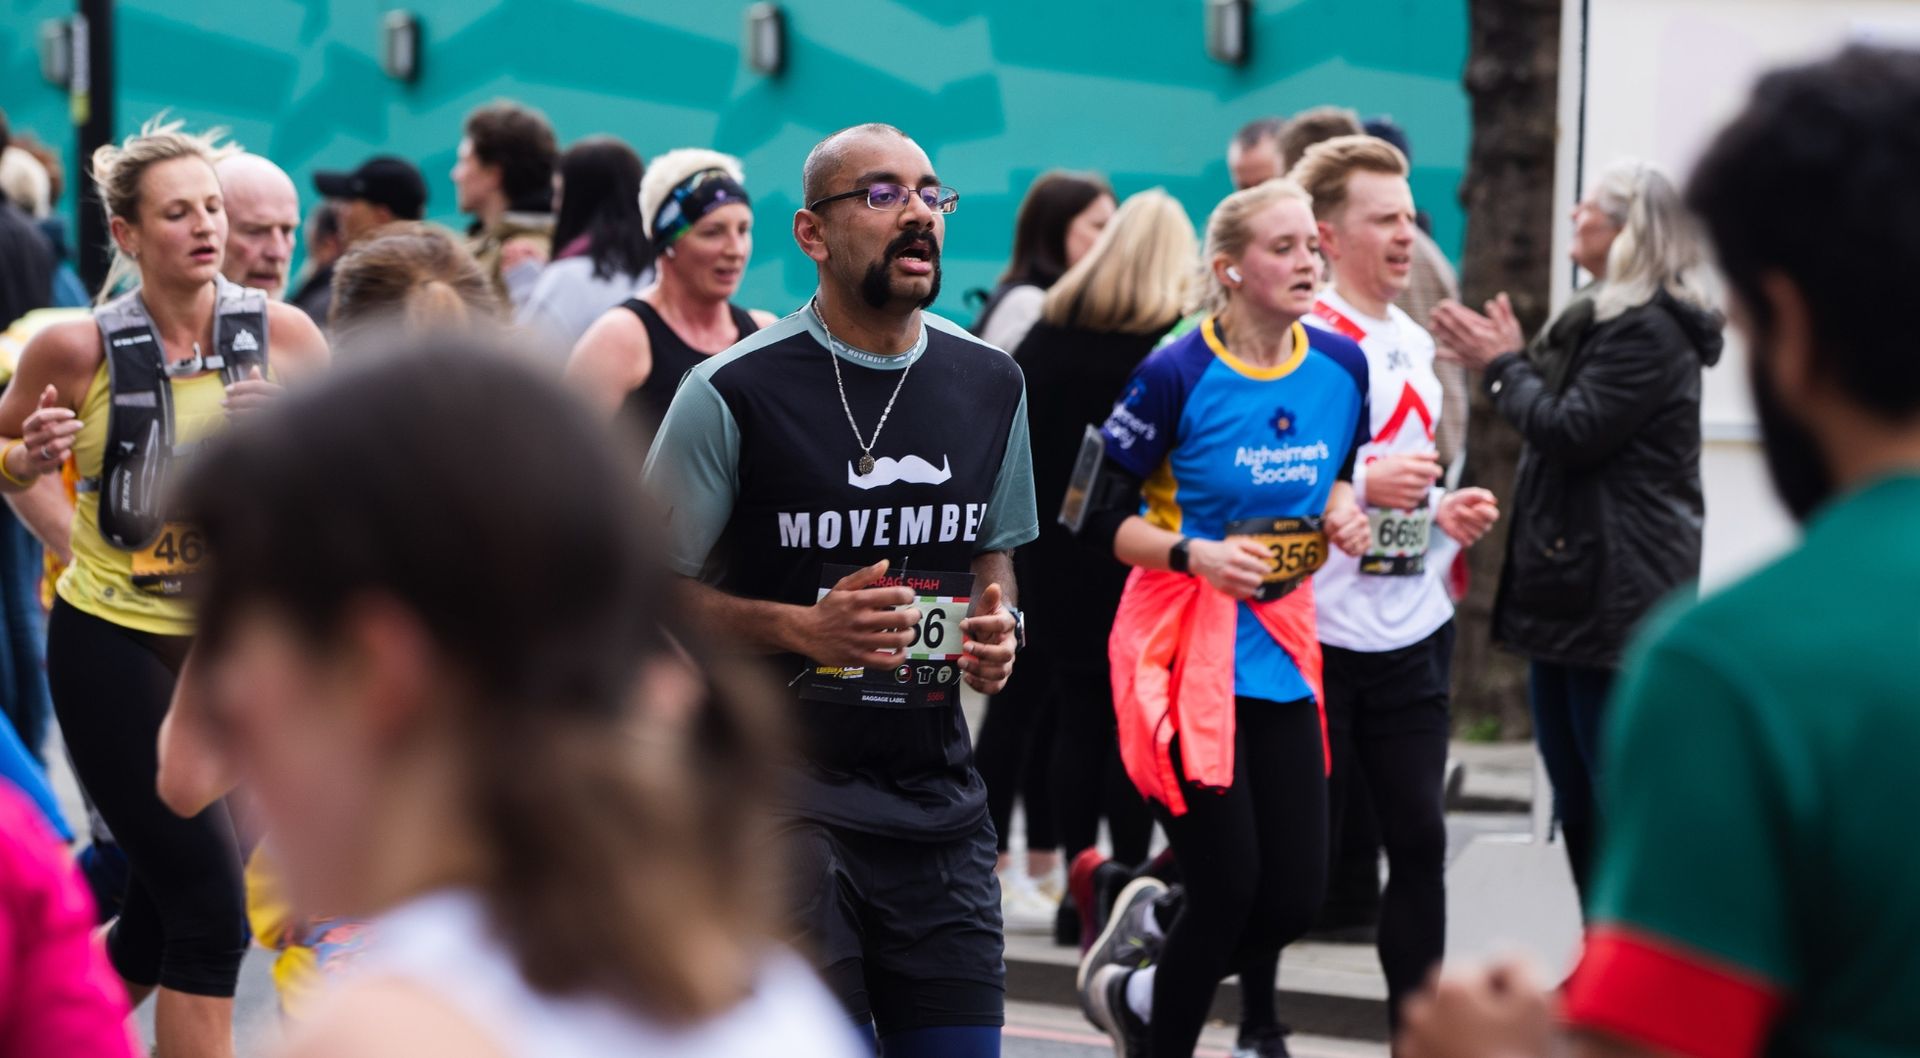 Man running in London Landmarks Half Marathon